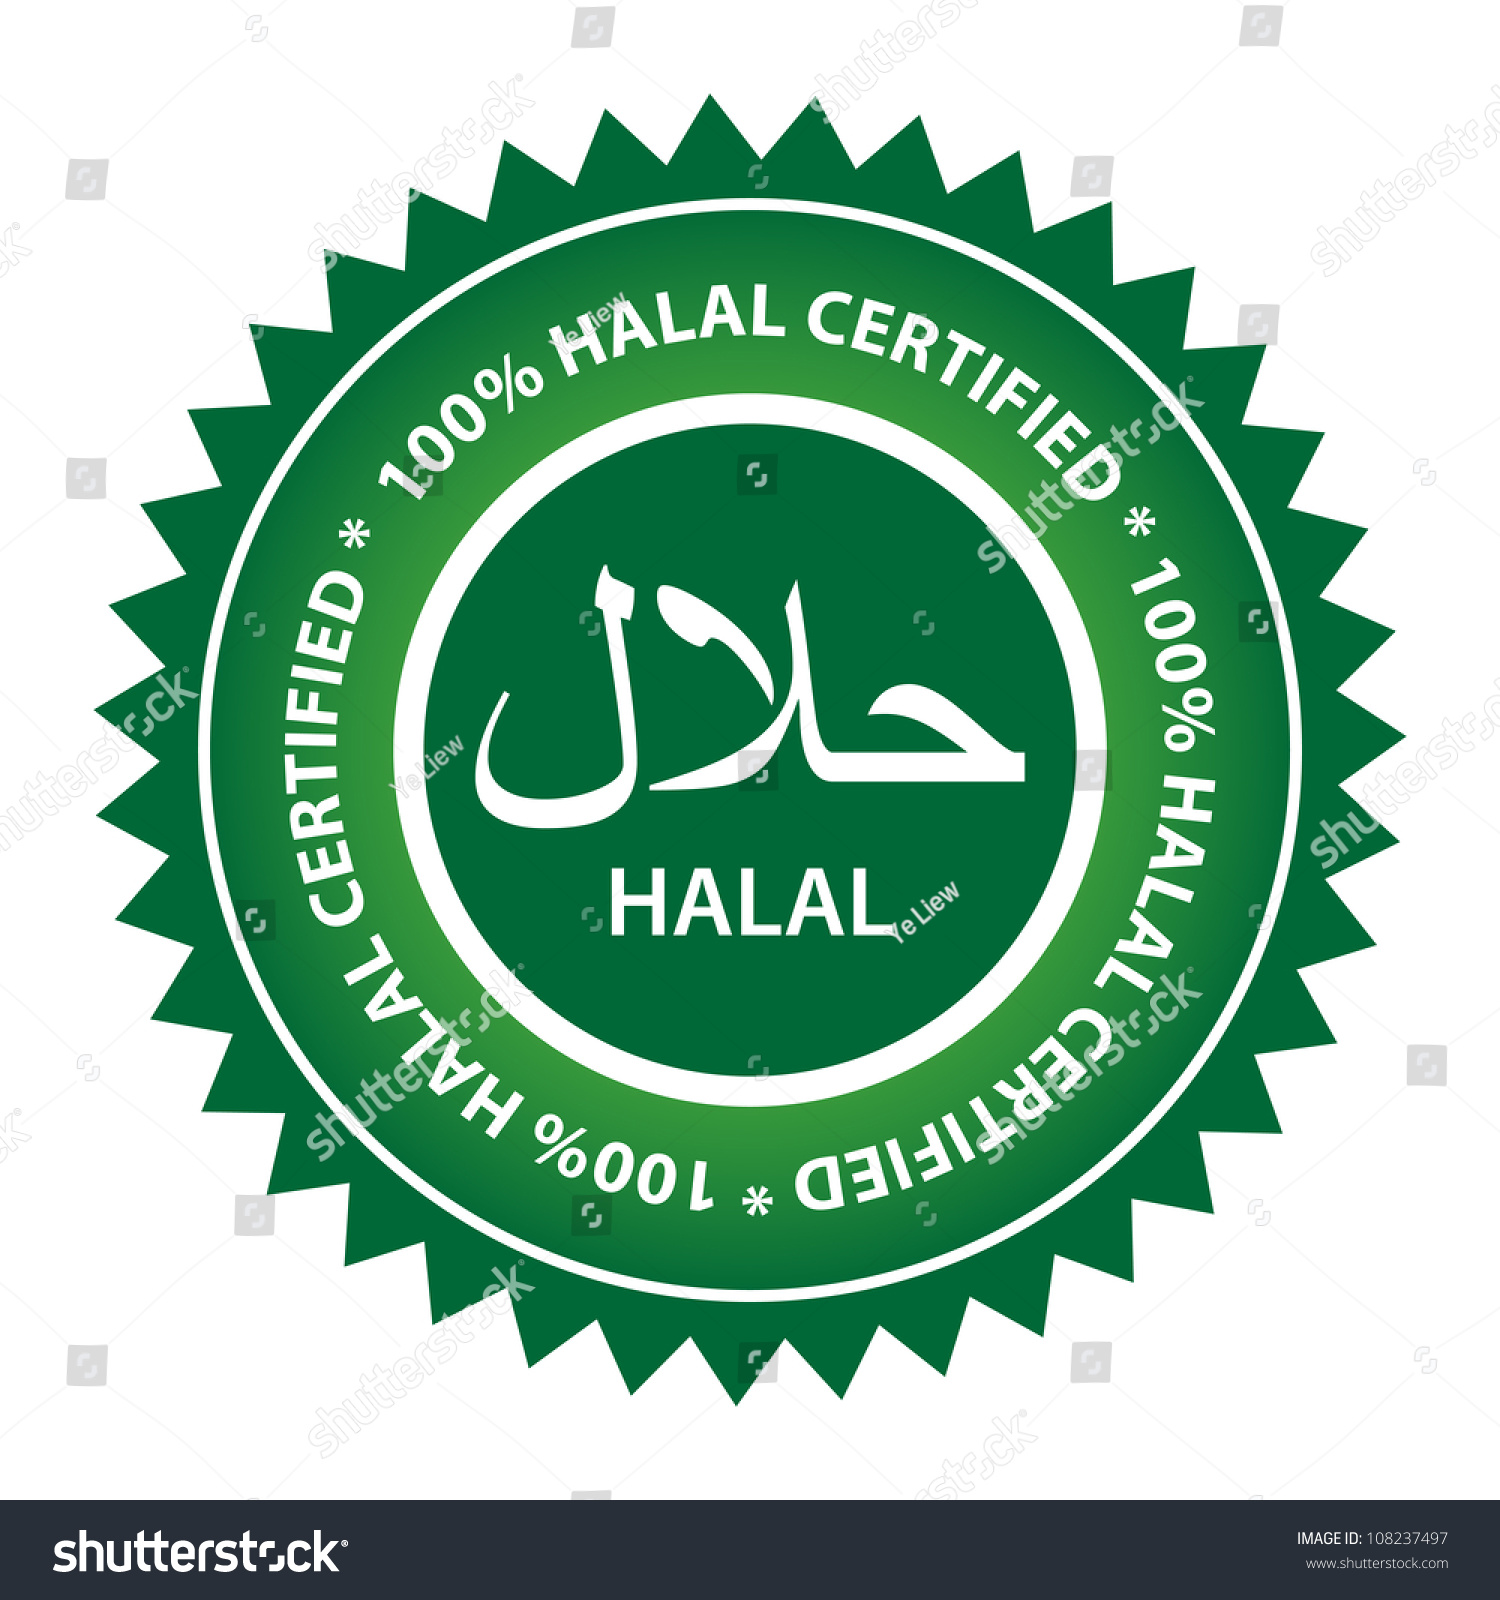 Binary option halal or haram